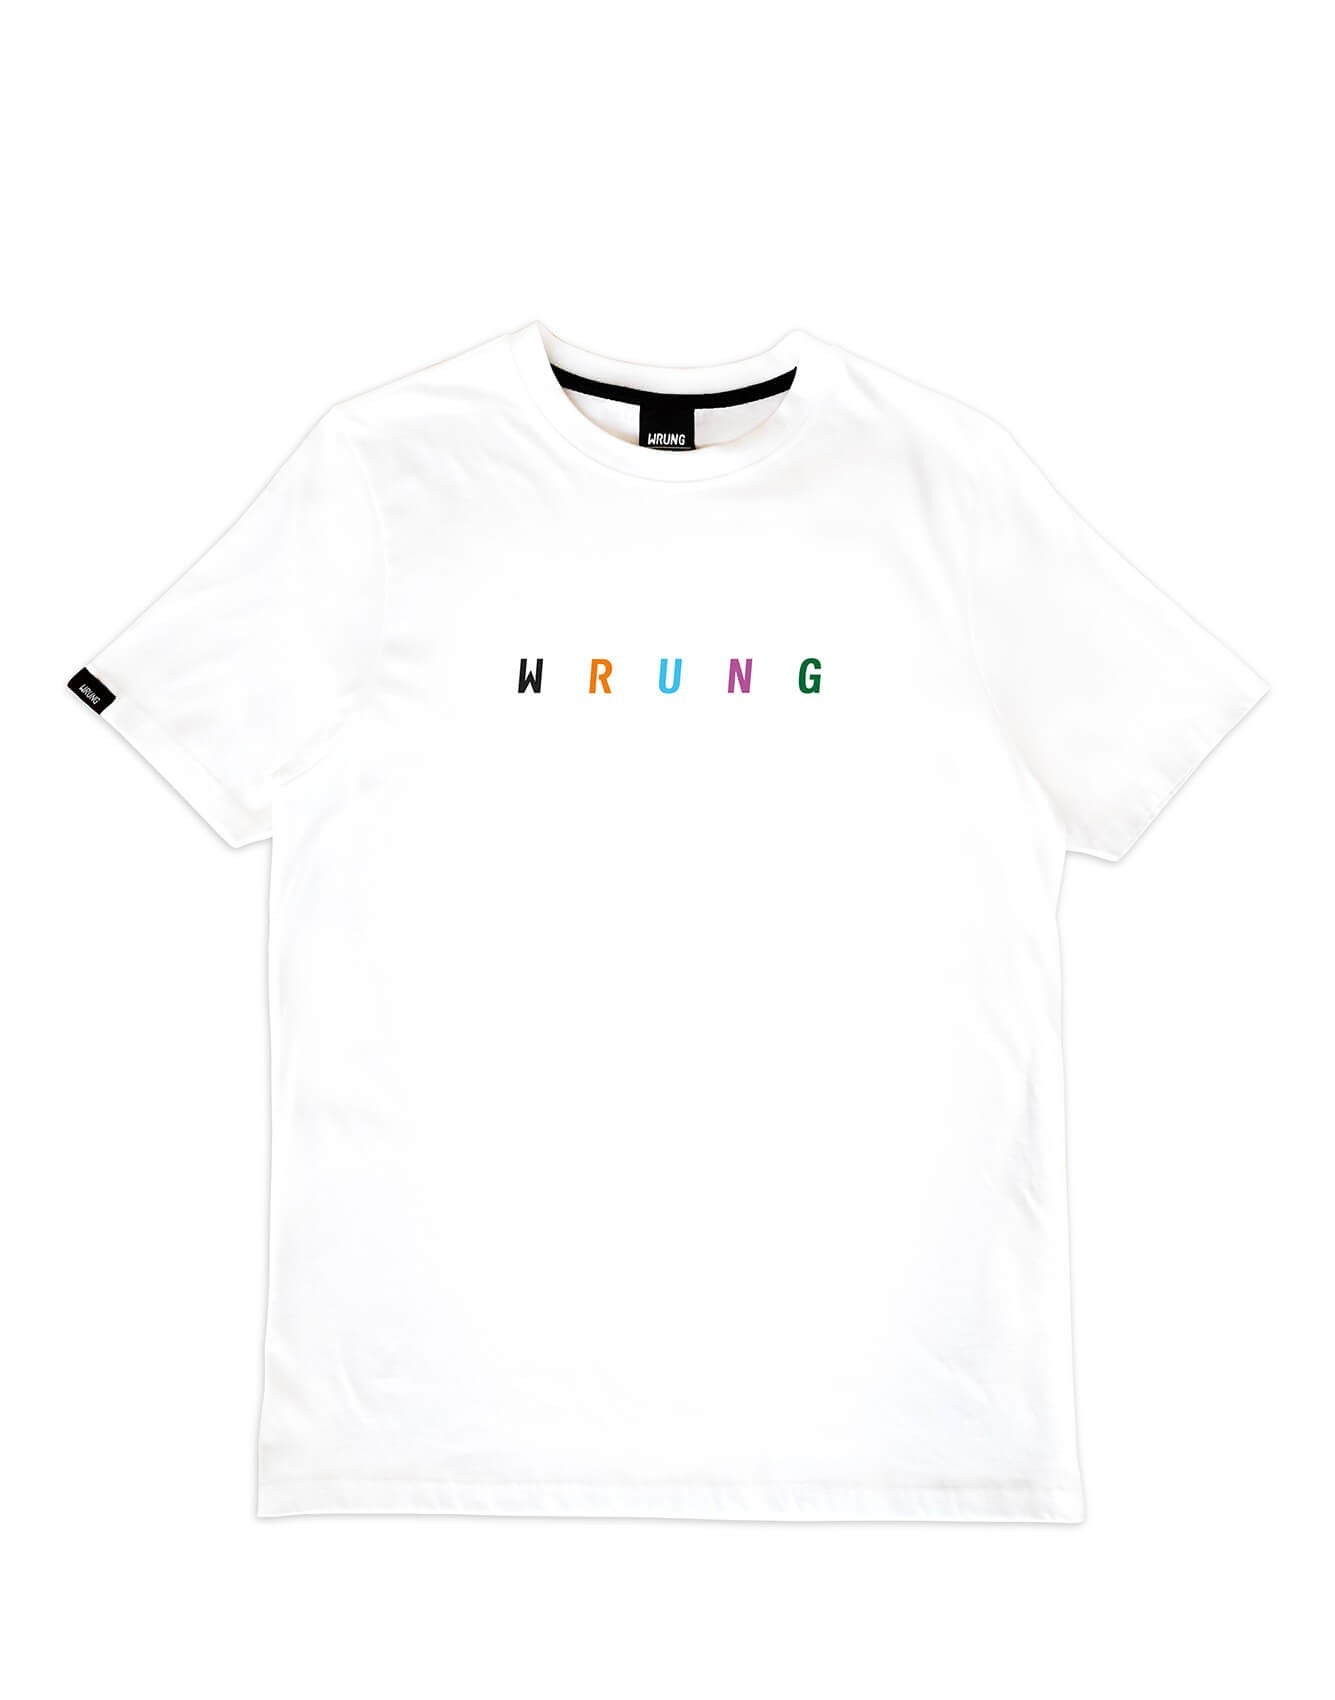 Wrung Solar T-Shirt White